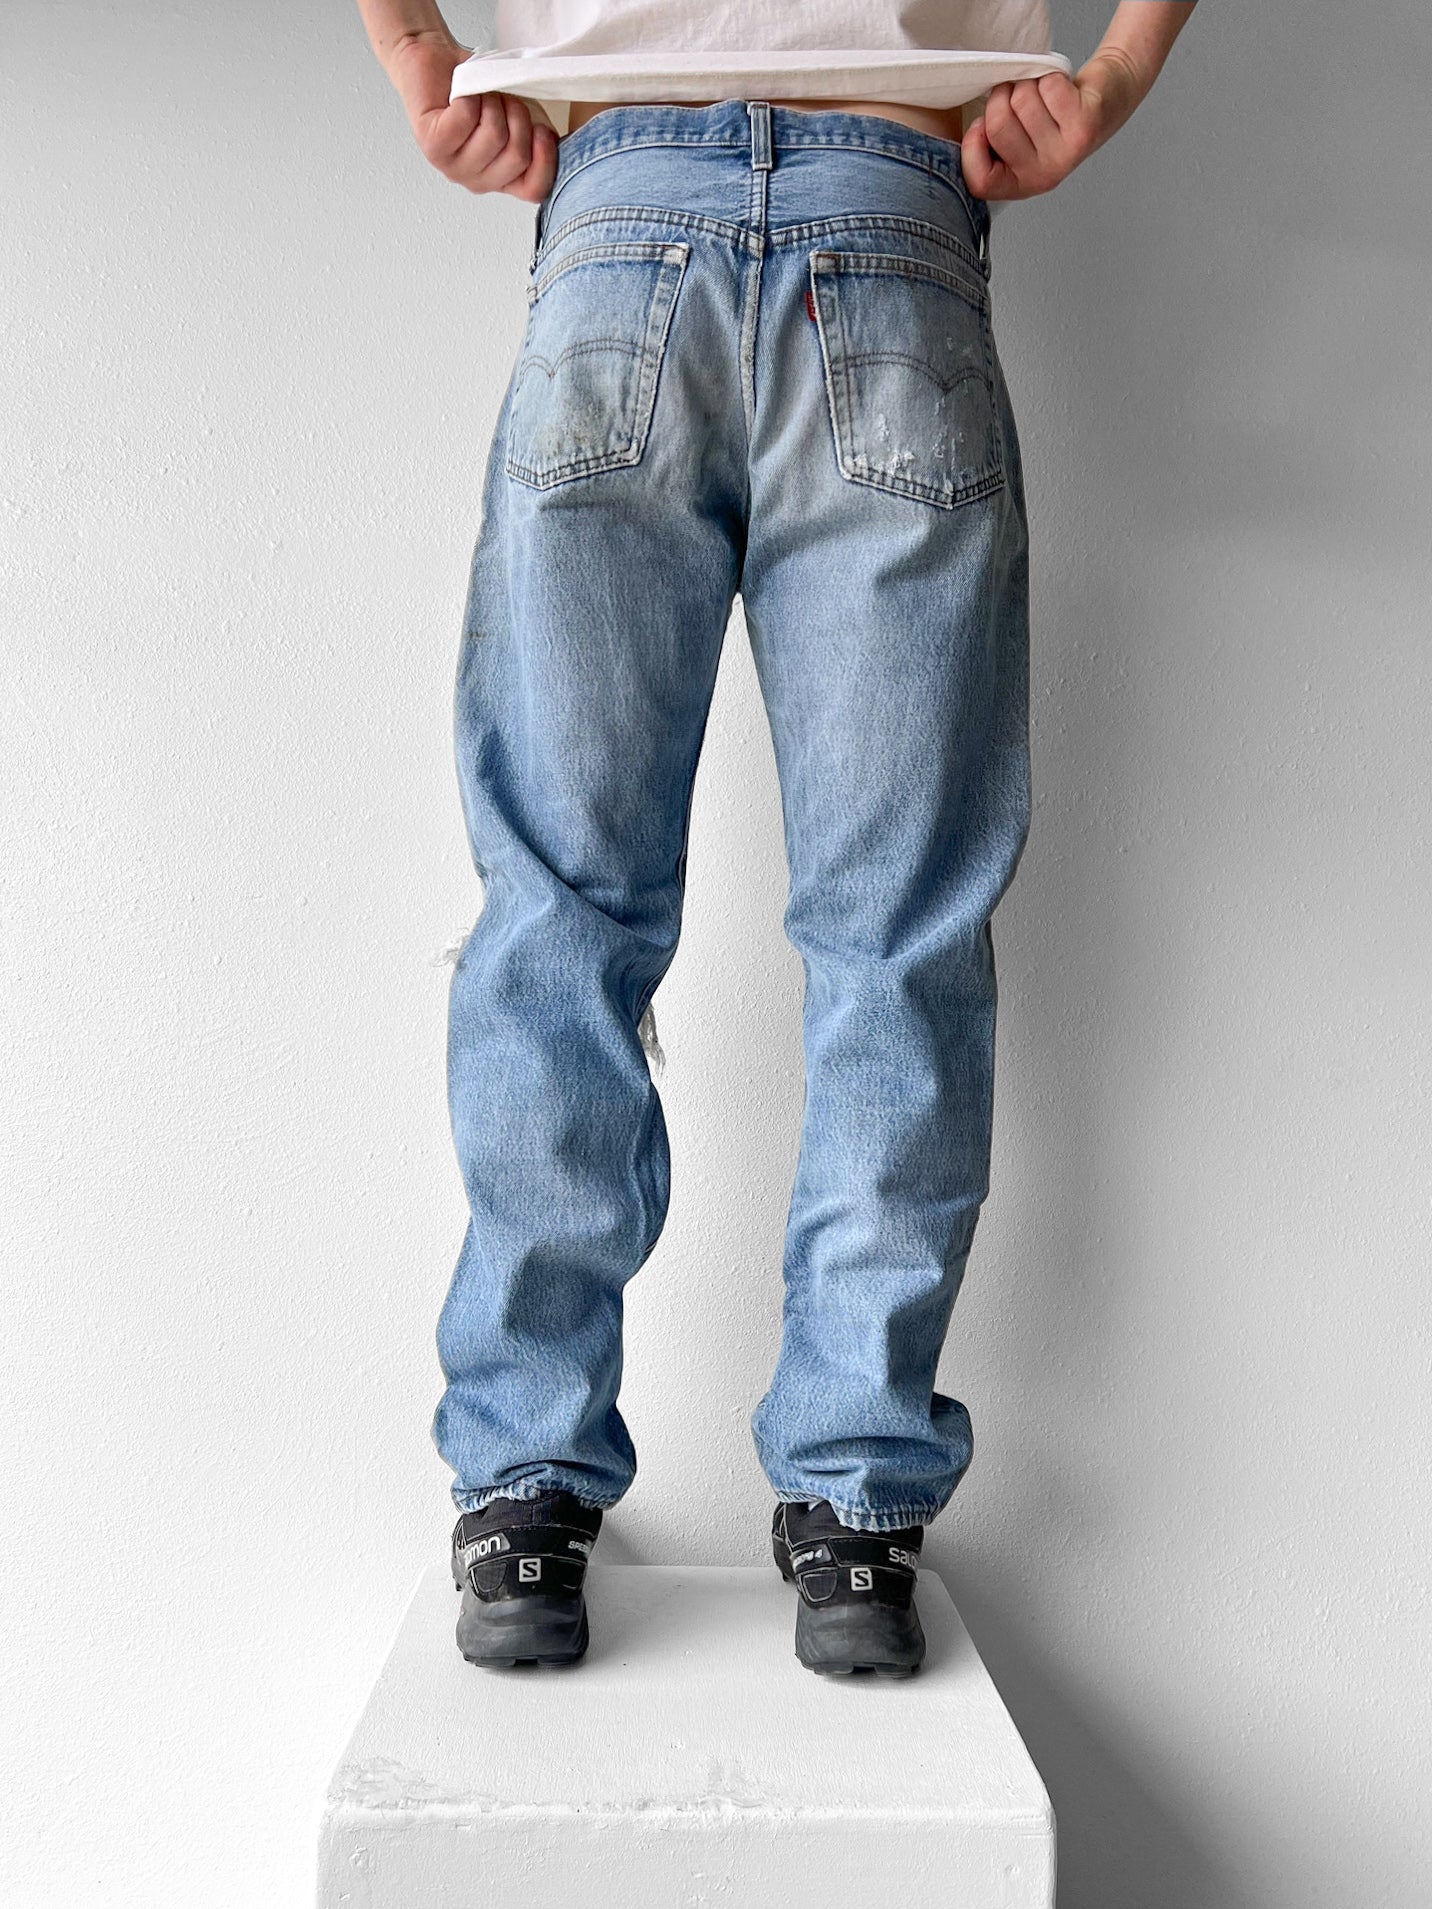 Levi's 501 Faded Lightwash Jeans  - 34 x 34